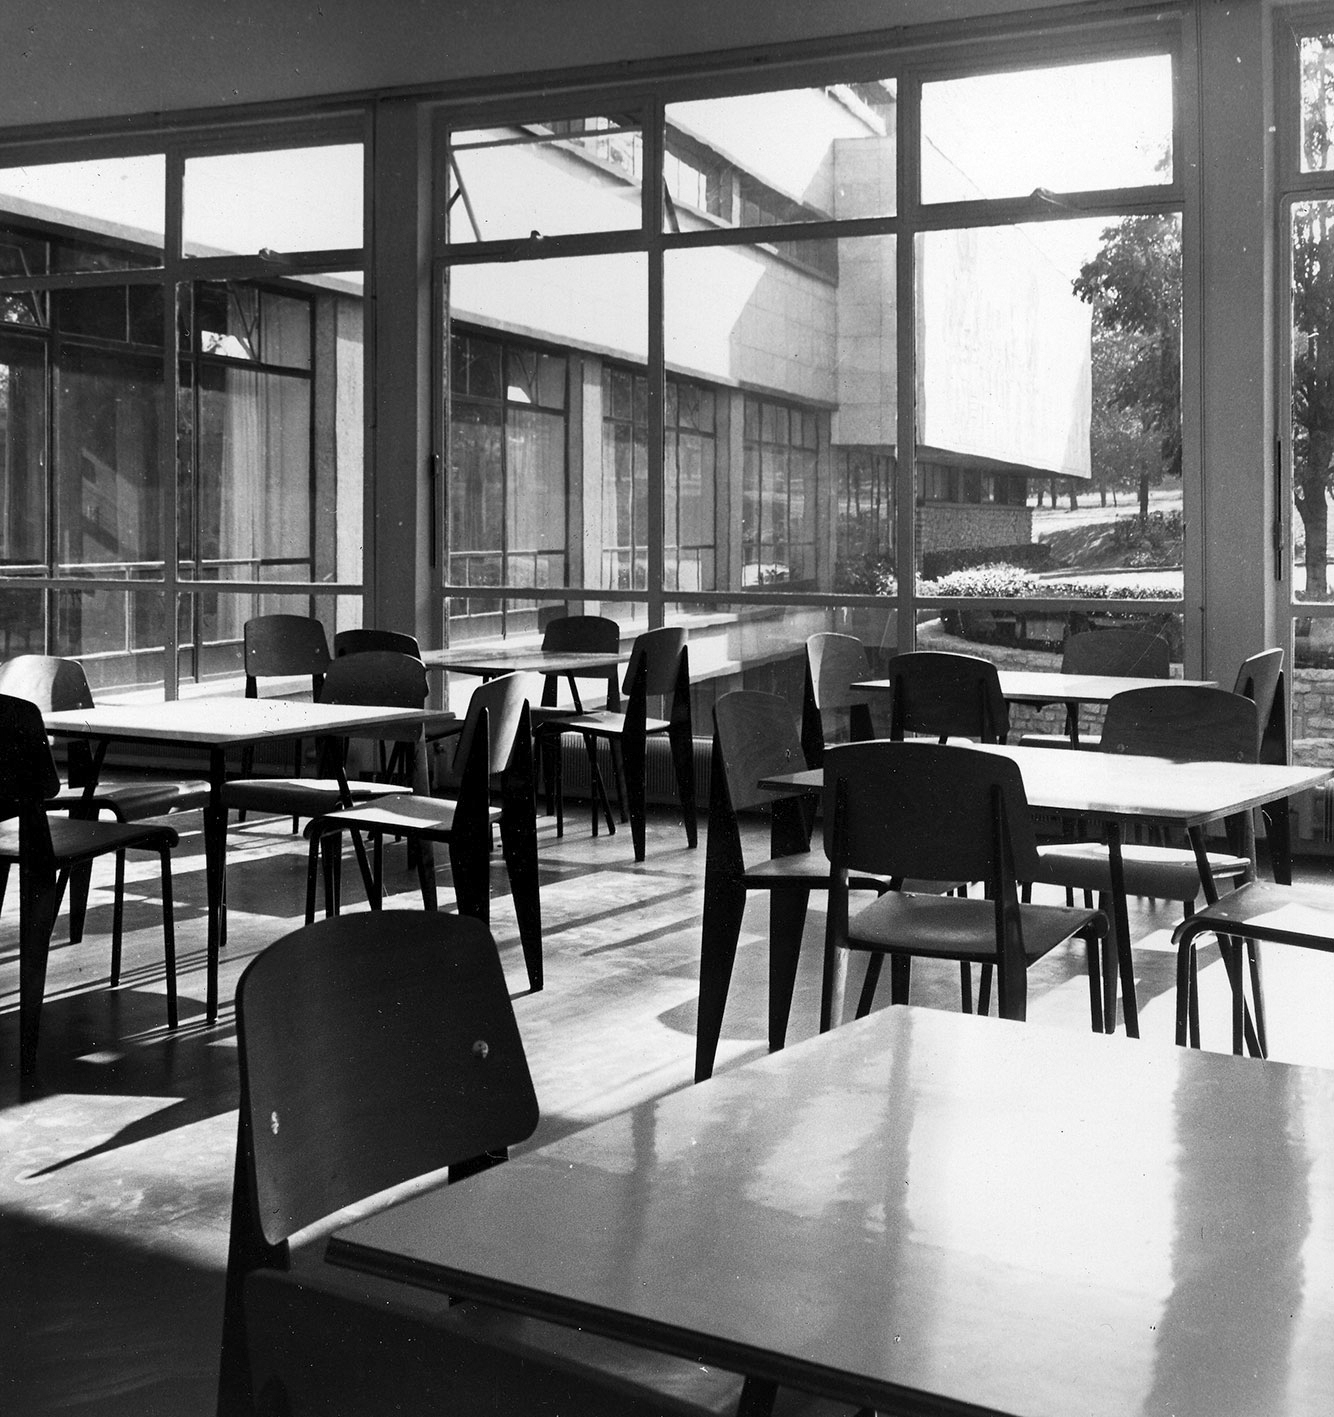 Cité Internationale Universitaire, Maison du Mexique, Paris (architect J.-L. Medellin, 1953). Cafeteria equipped by Charlotte Perriand, with tables type 510 (design: Ch. Perriand) and Métropole no. 305 chairs from Ateliers Jean Prouvé.